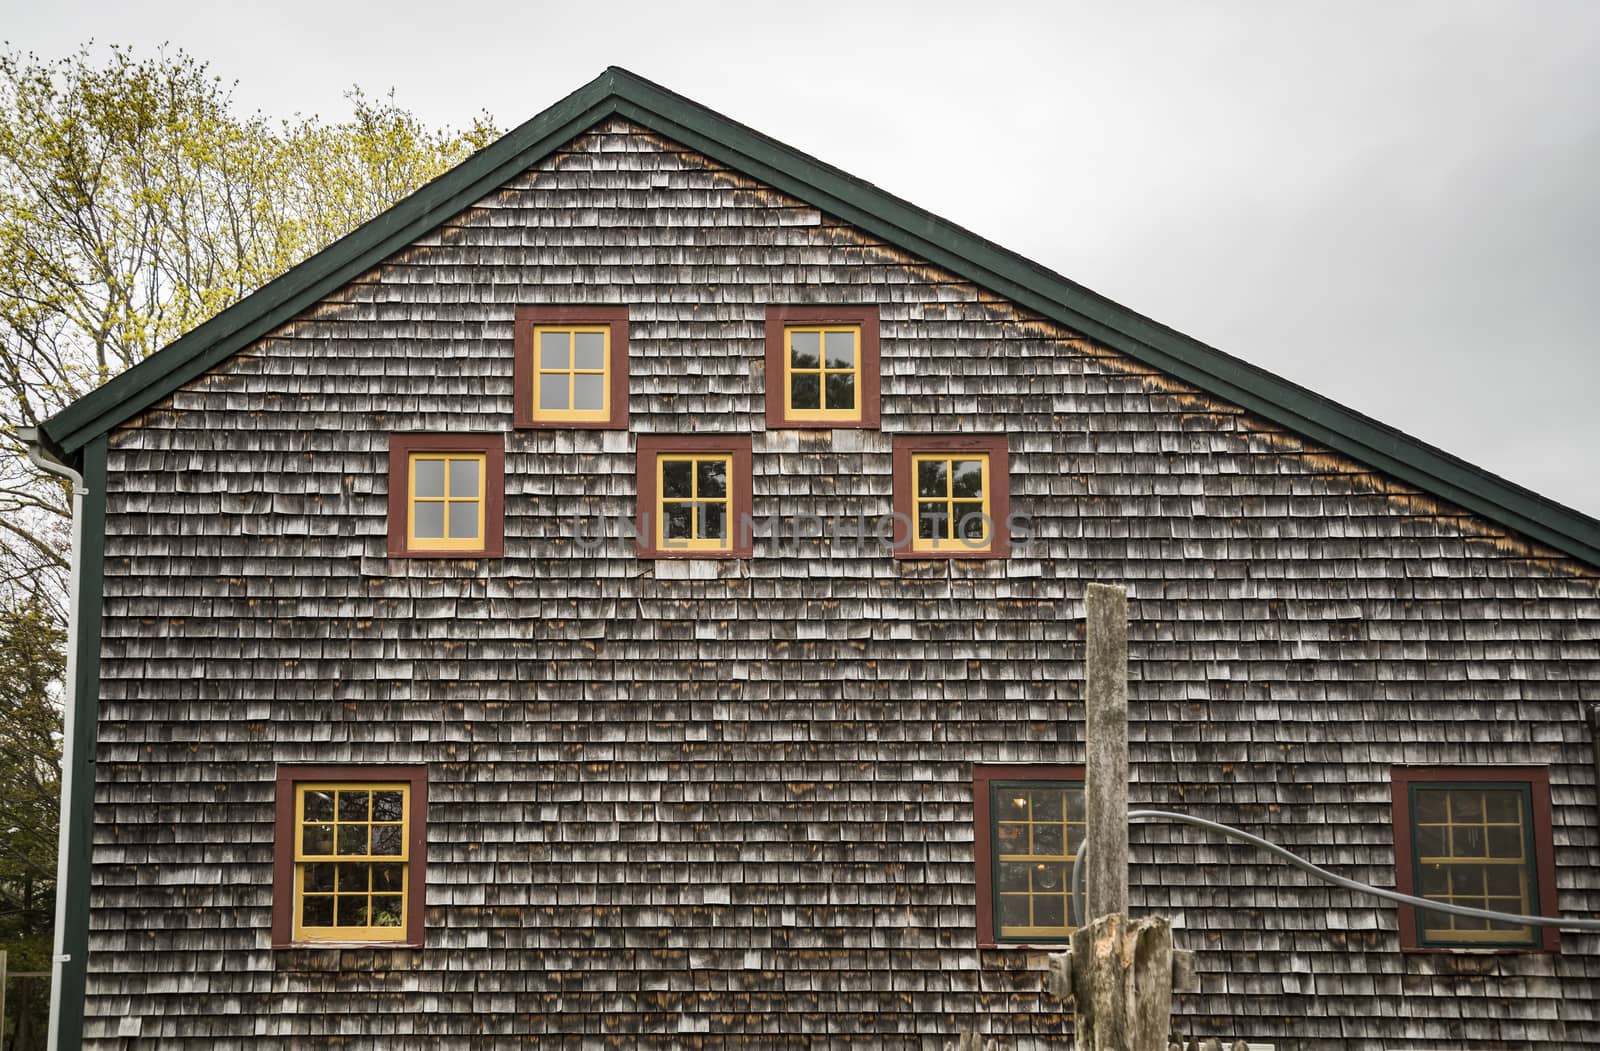 Detail of New England Farm House, RI USA